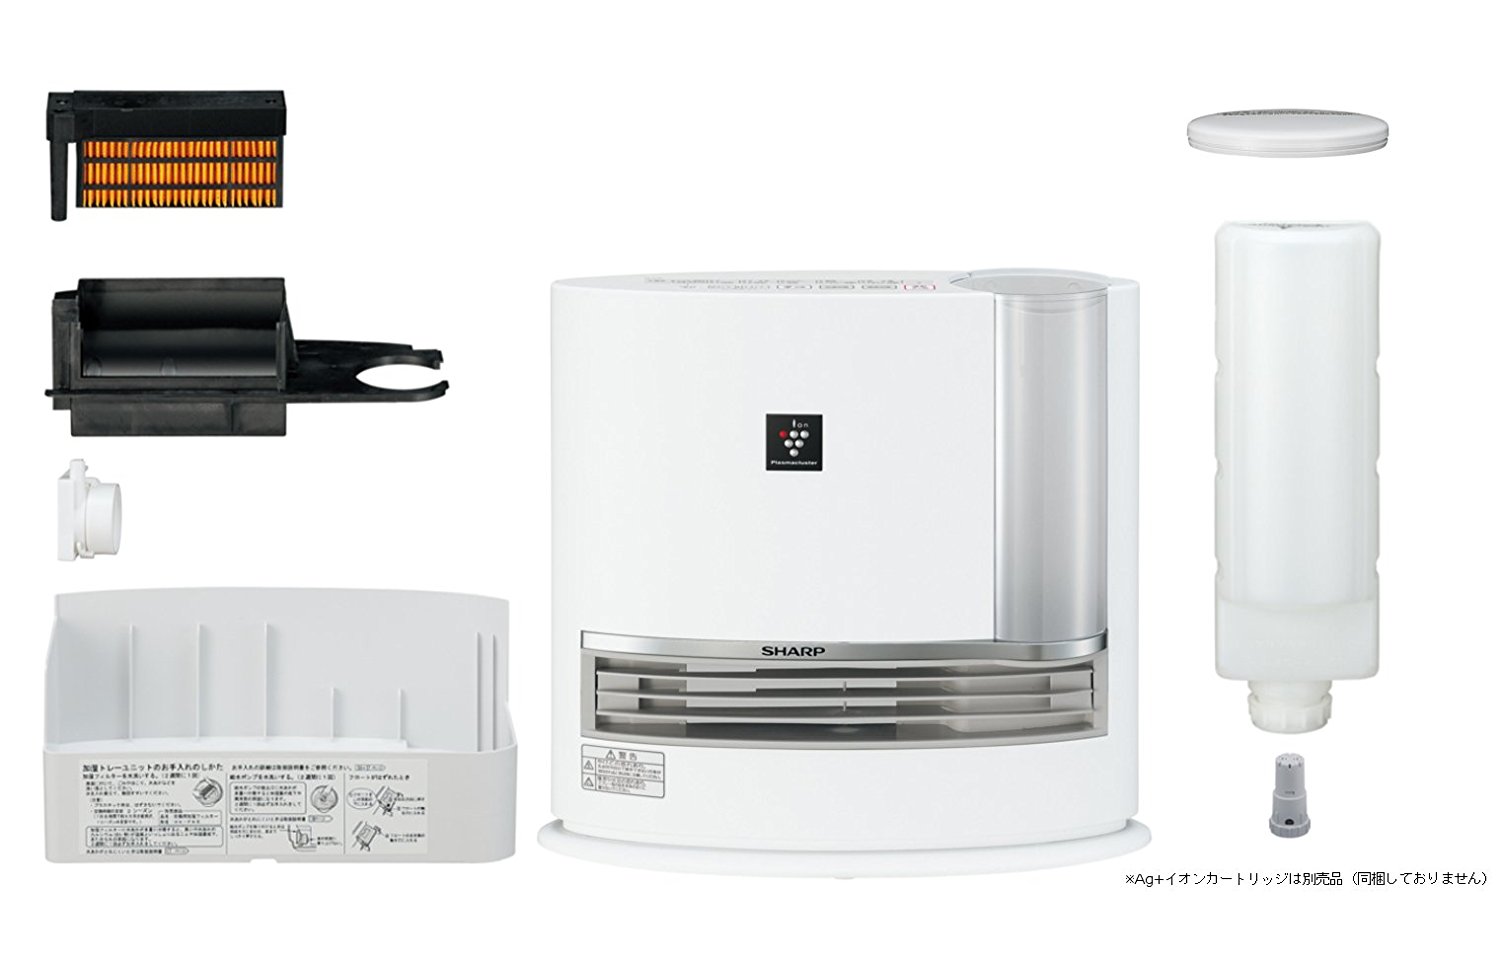 HX-C120-W white ceramic fan heater with humidifier SHARP